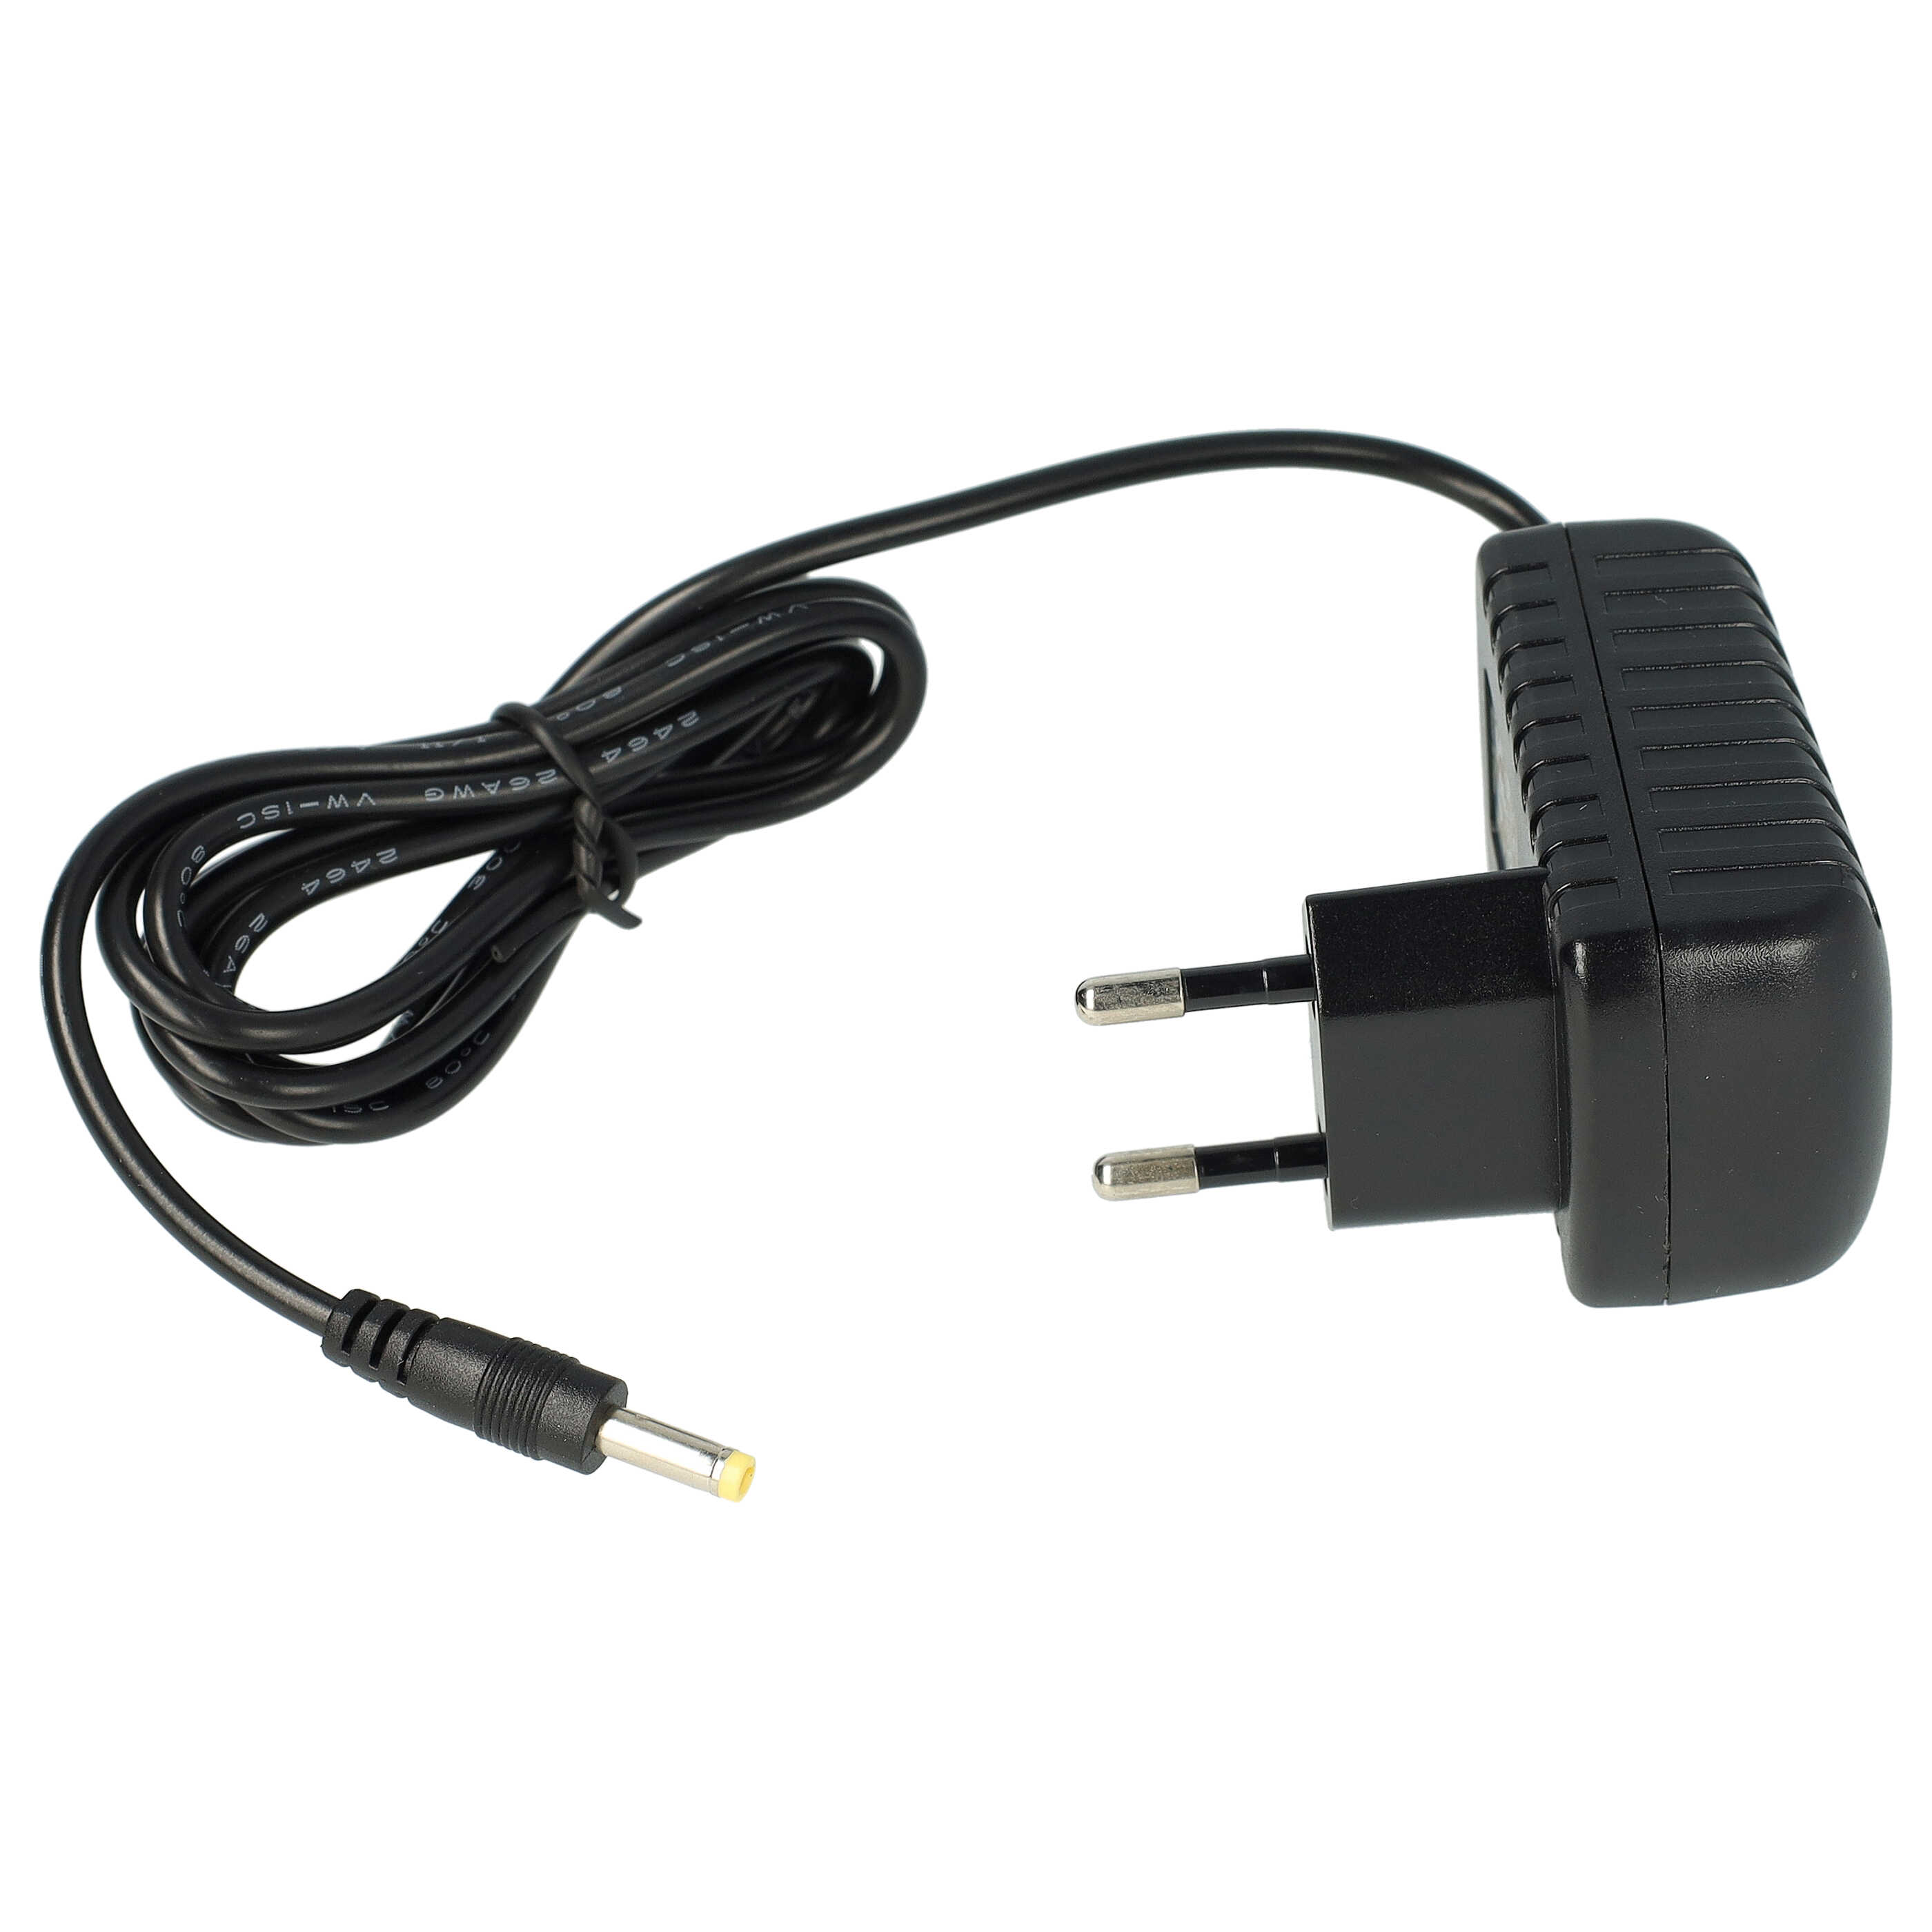 Mains Power Adapter replaces Black & Decker 90500856-01 for Black & Decker Power Tool